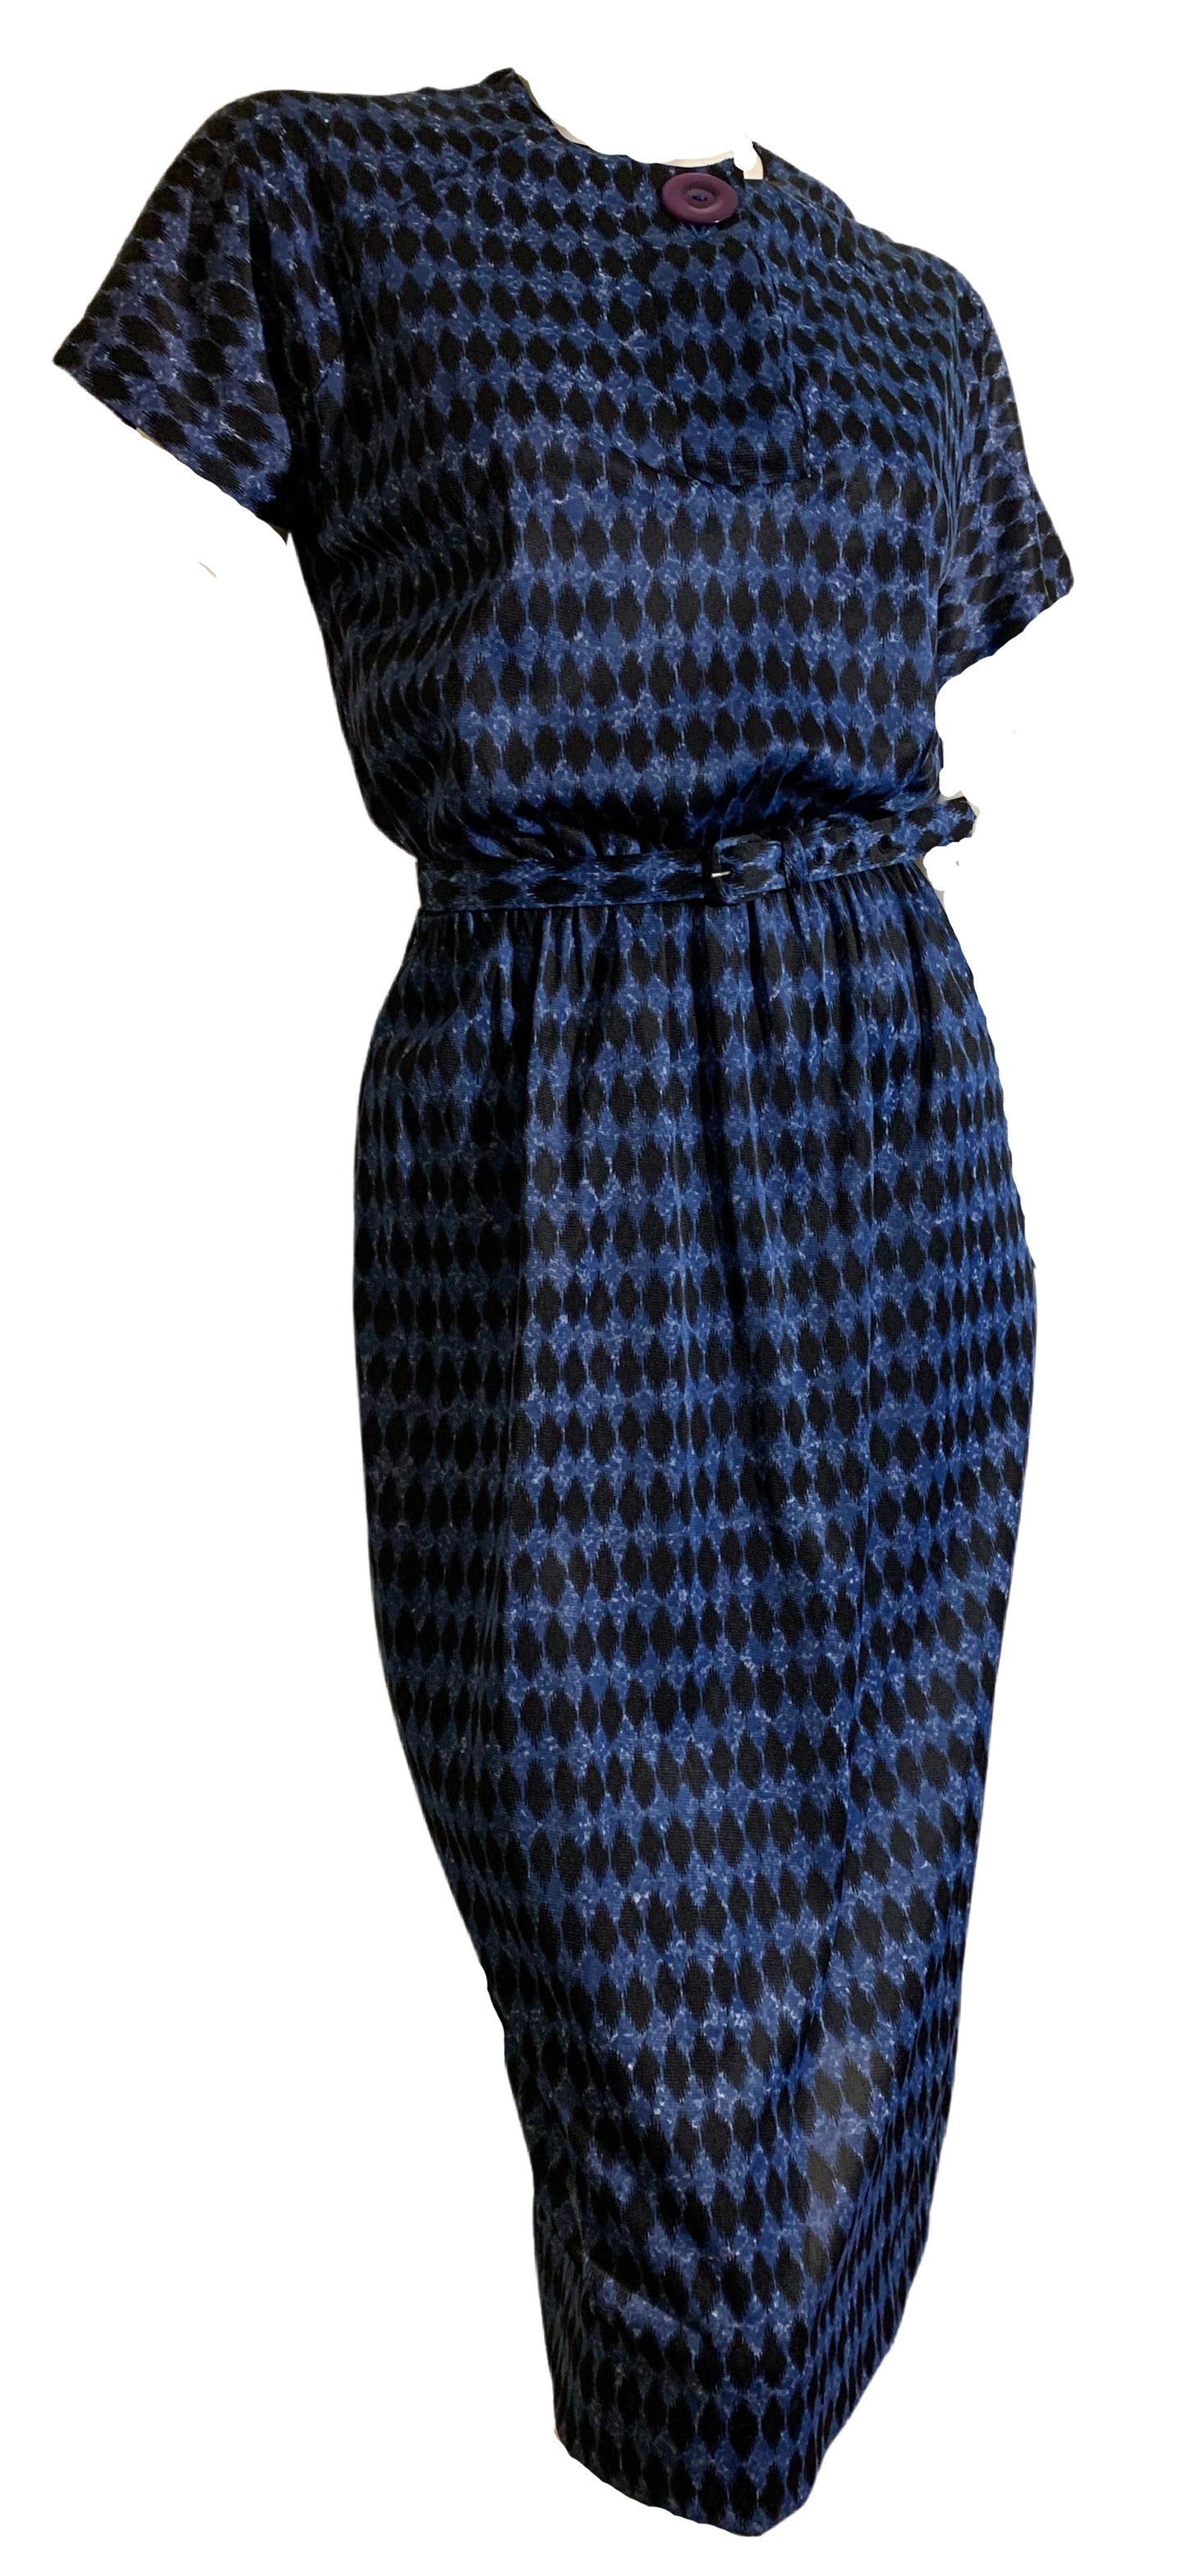 Harlequin Black and Blue Print Jersey Nylon Dress circa 1960s